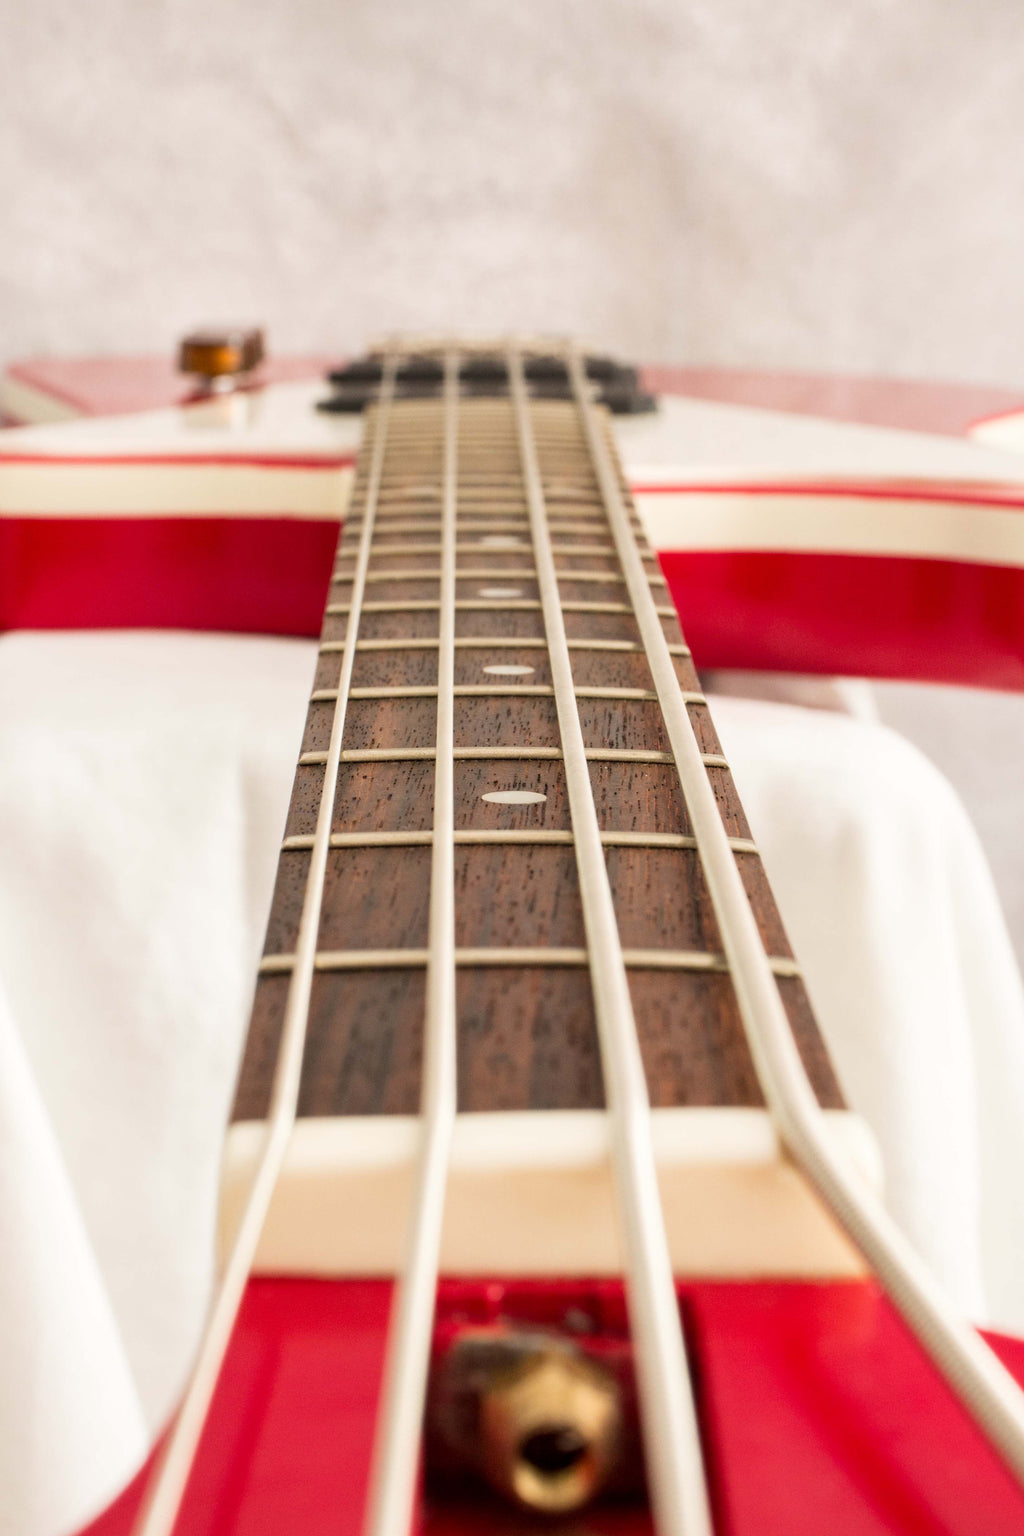 Mystery Non-Reverse Firebird Style Bass Dakota Red 2016